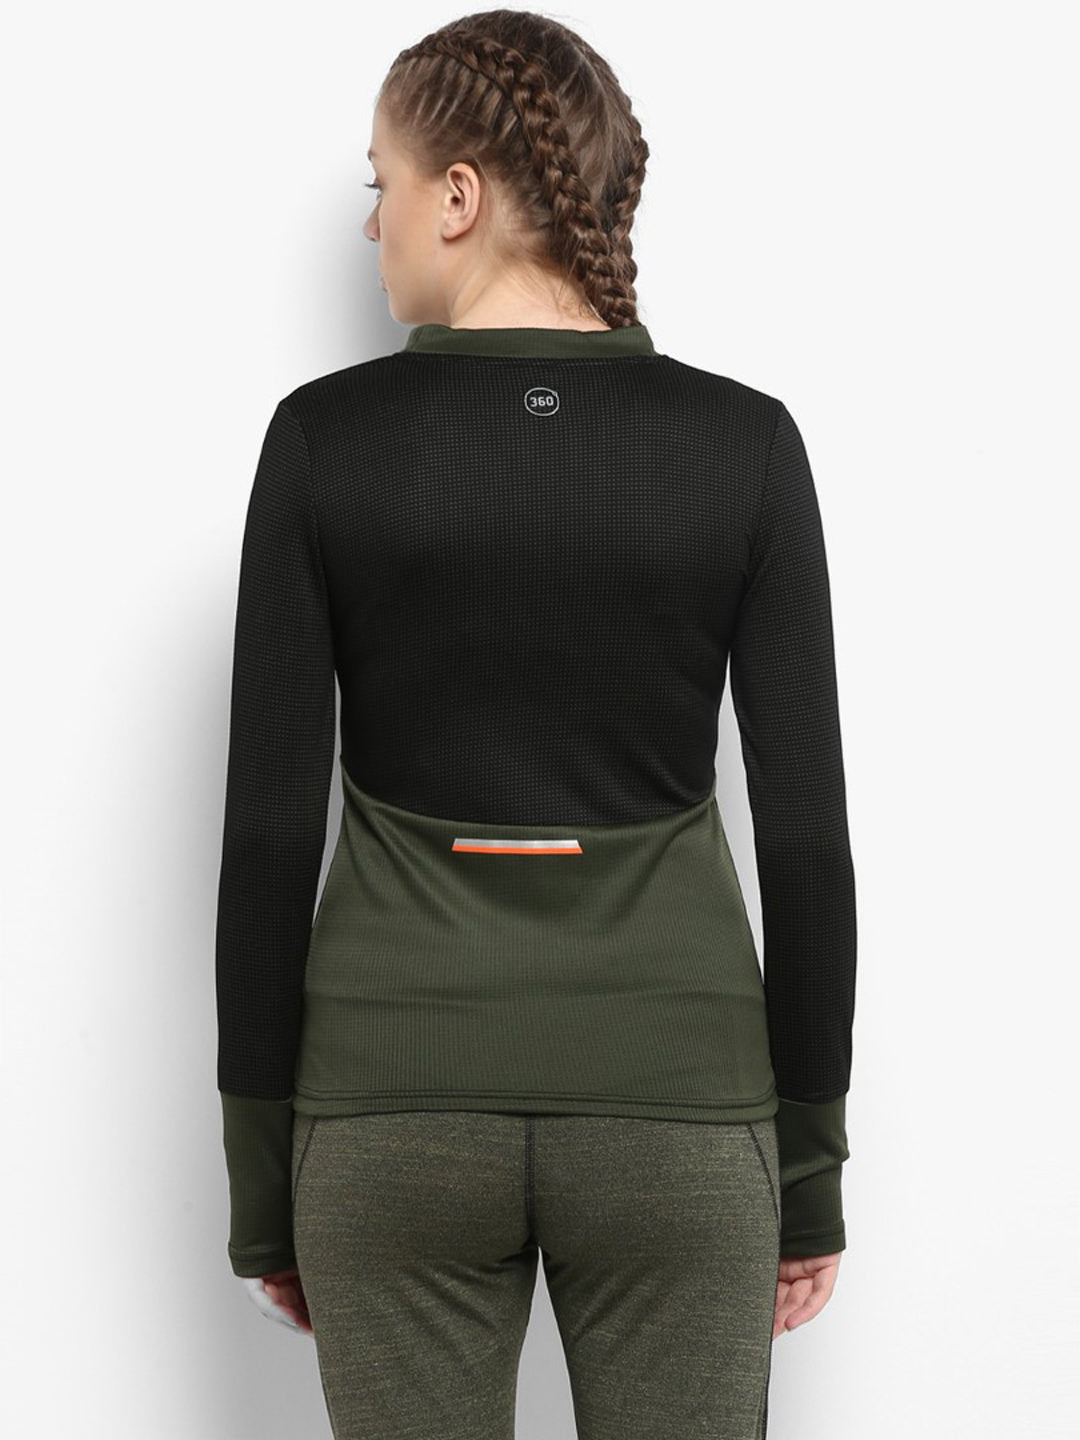 Alcis Women Black  Olive Green Printed AntiStatix Rapid Dry Sweatshirt